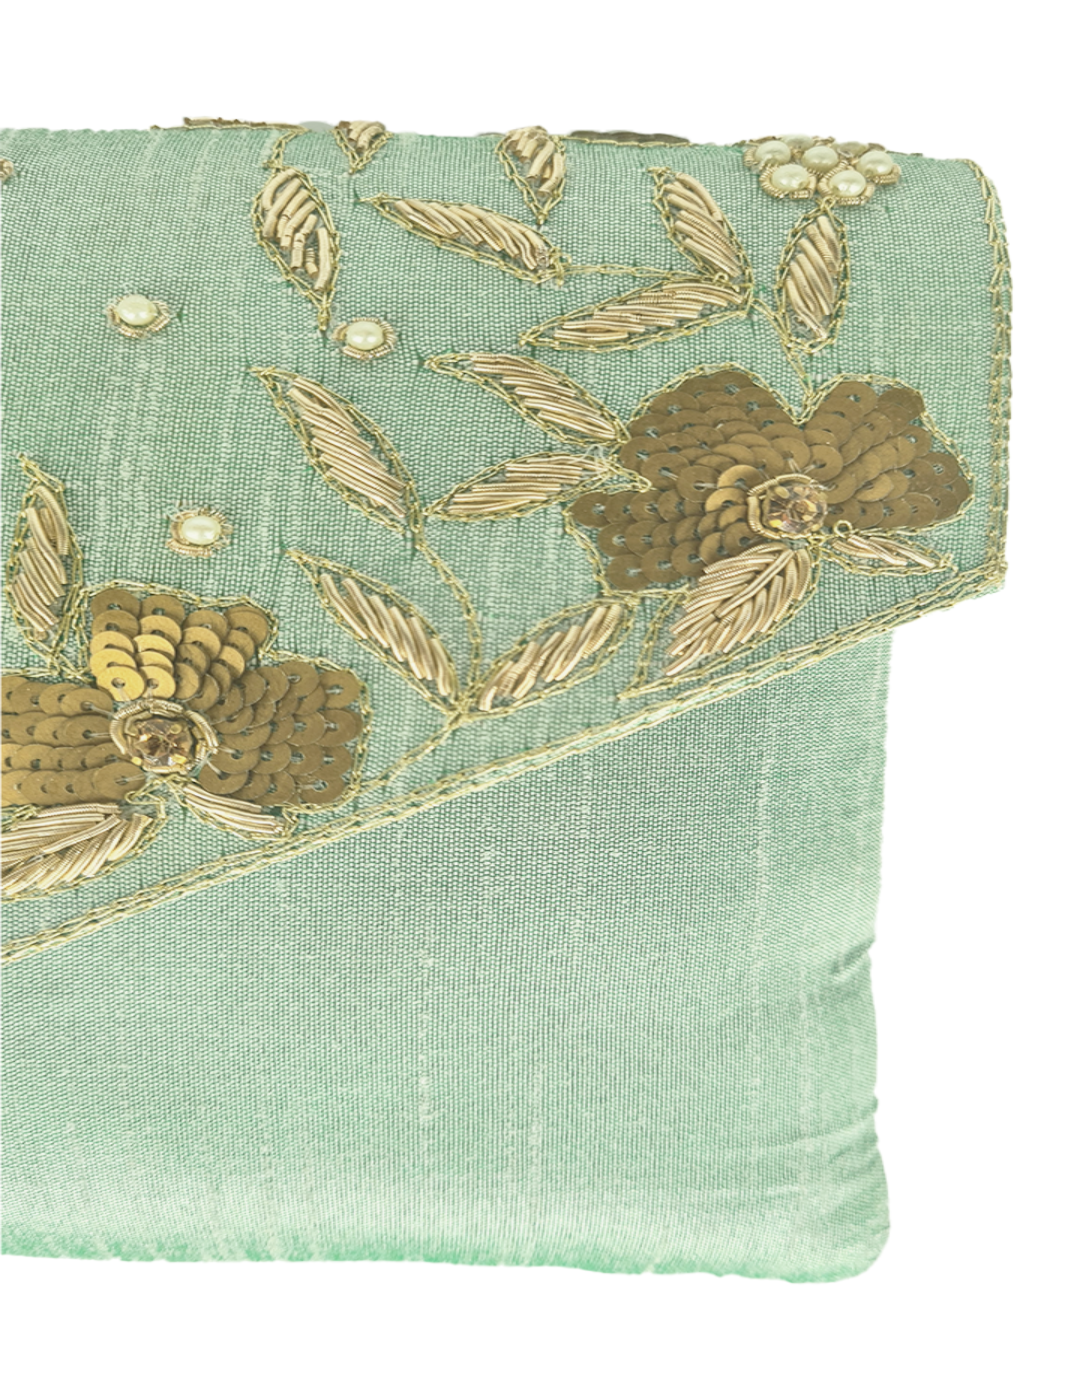 Green Clutch In Raw Silk With Zardozi Hand Embroidery